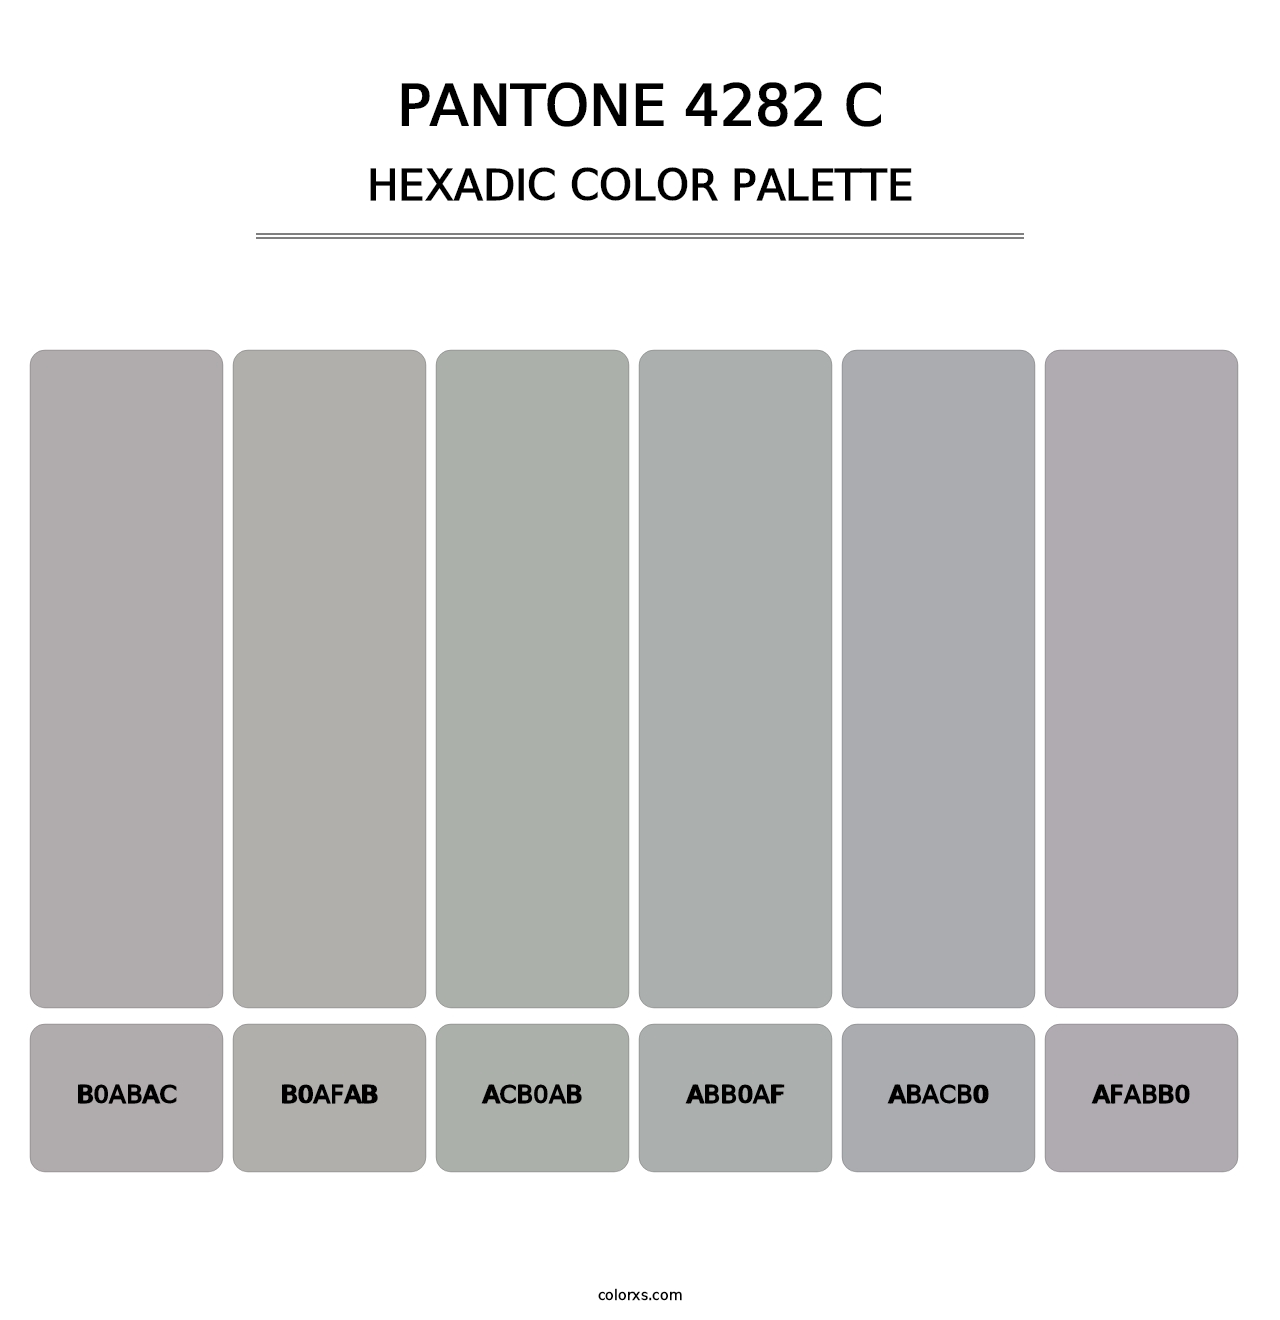 PANTONE 4282 C - Hexadic Color Palette